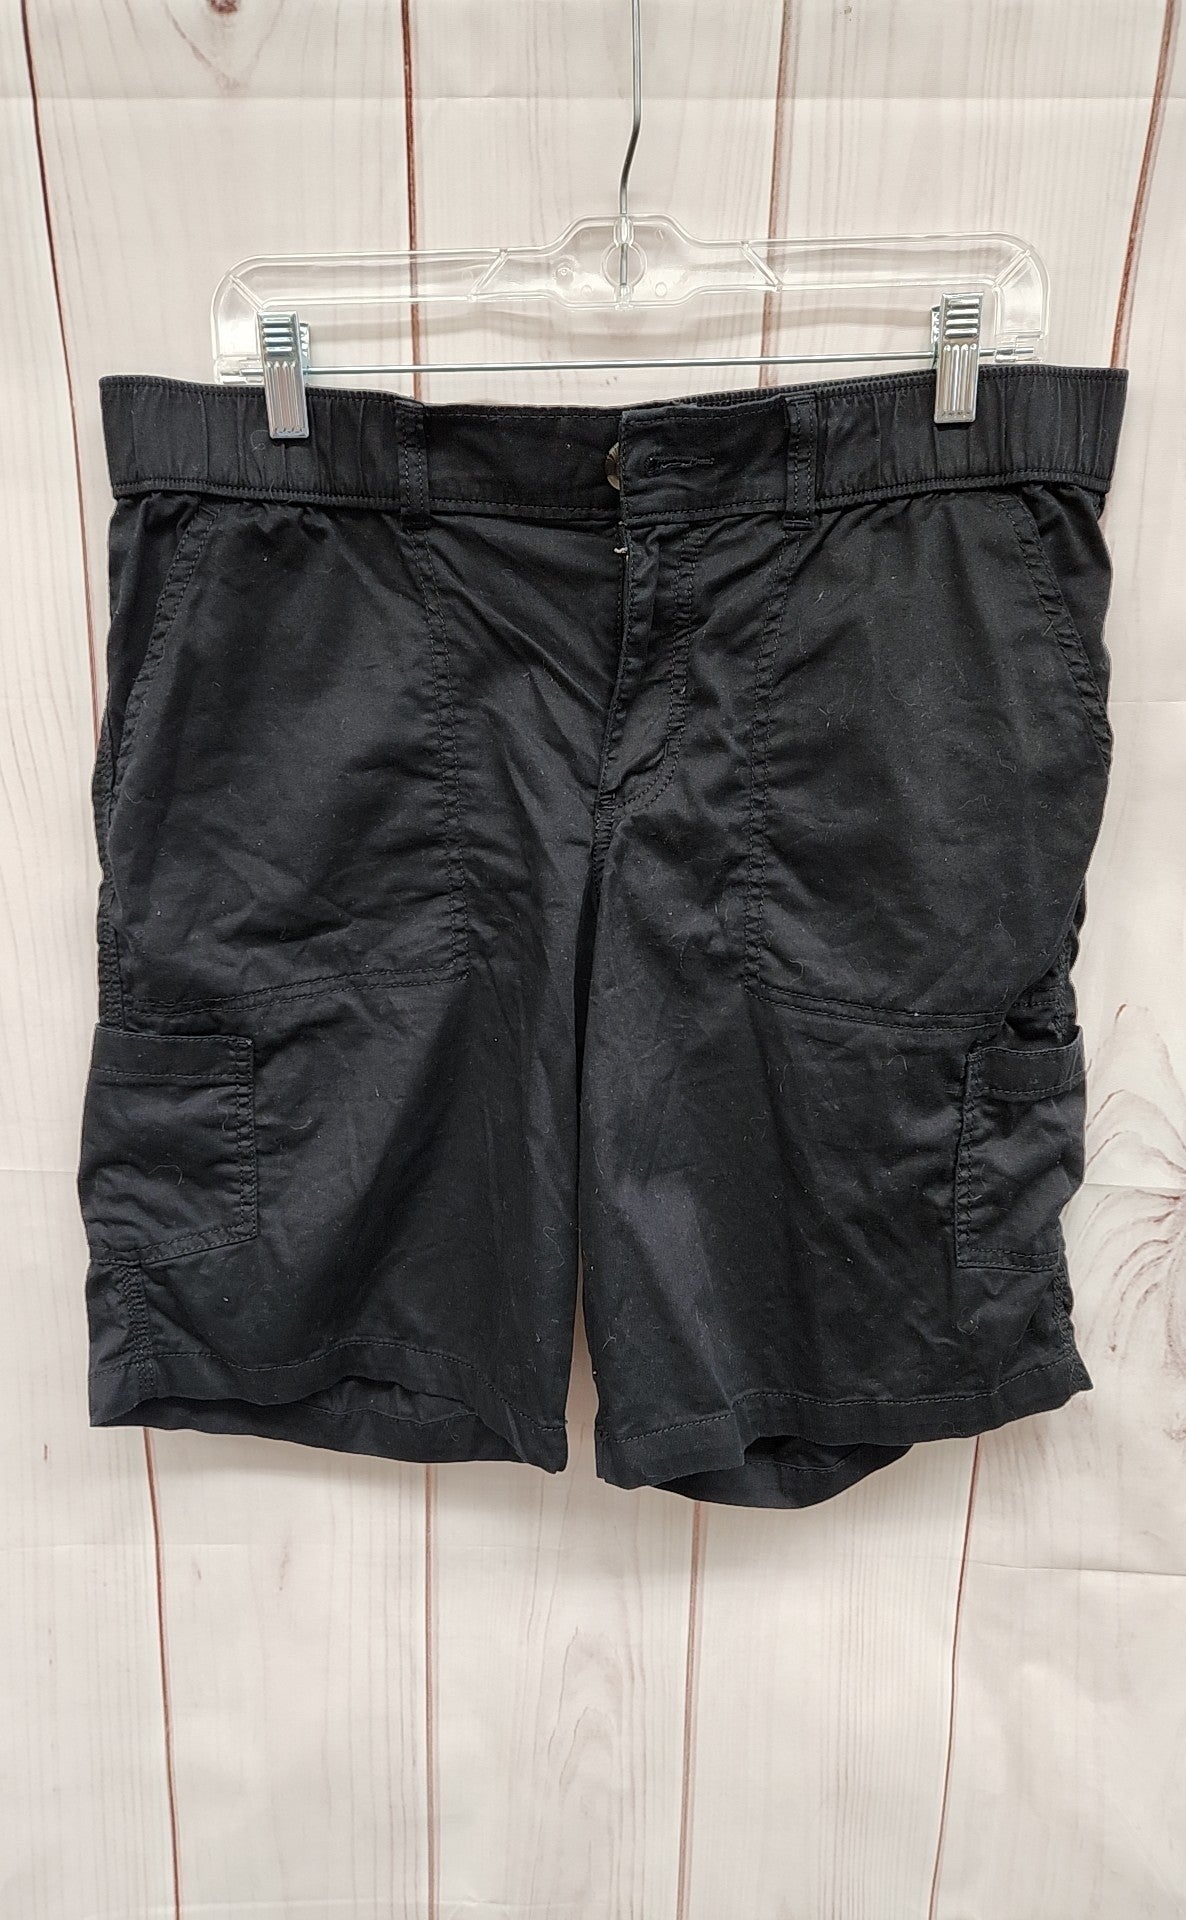 Sonoma Women's Size 14 Black Shorts